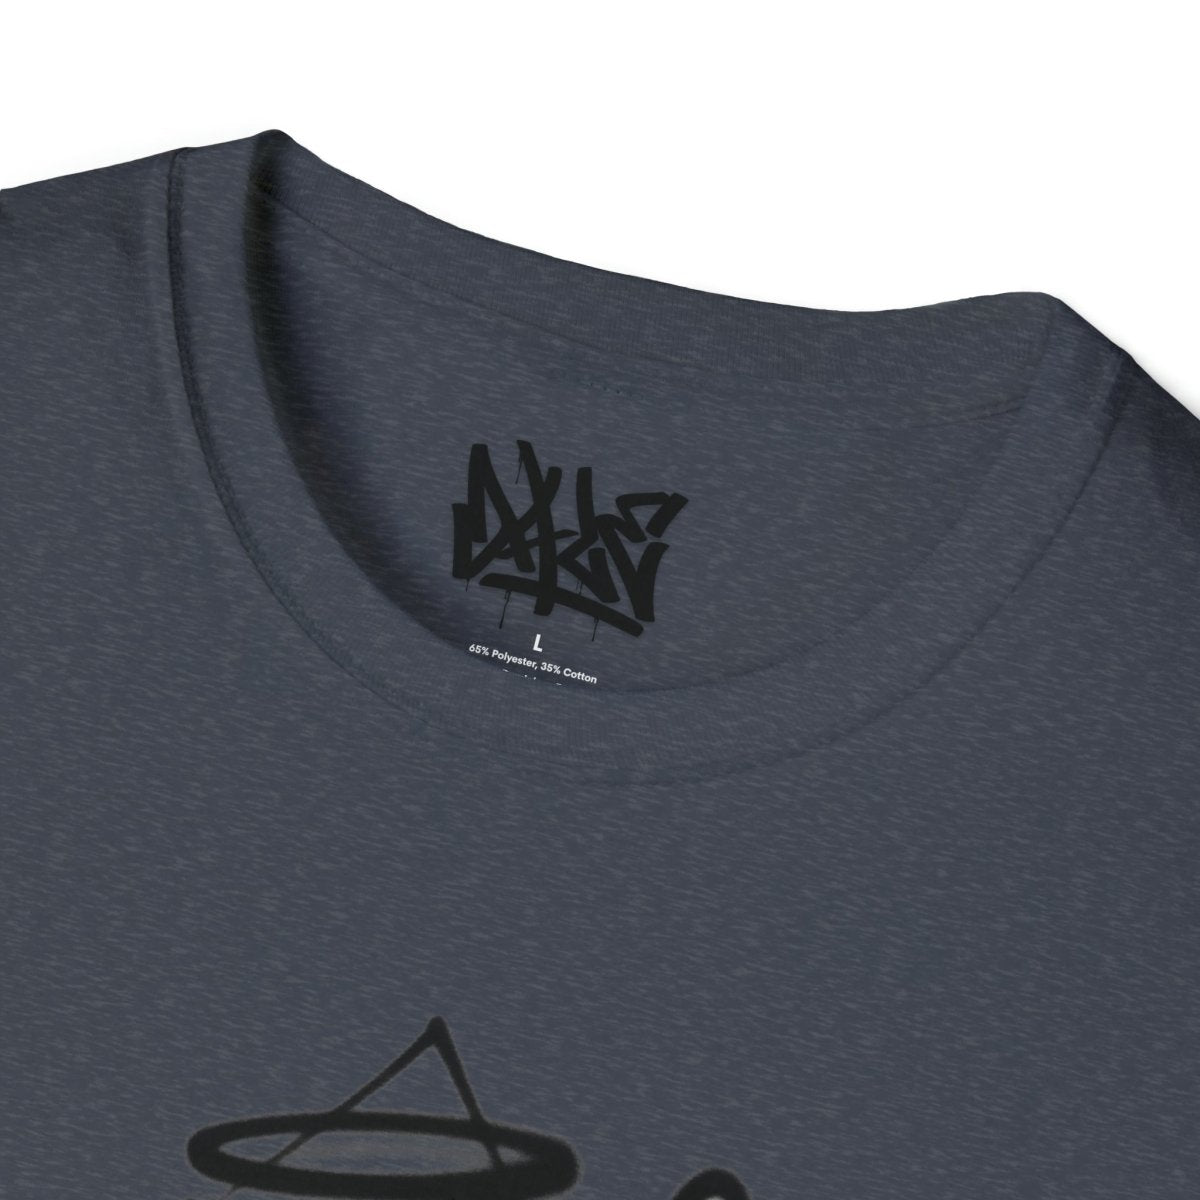 AMEN Trinity T Shirt Customizable Airbrush T shirt Design from Airbrush Customs x Dale The Airbrush Guy